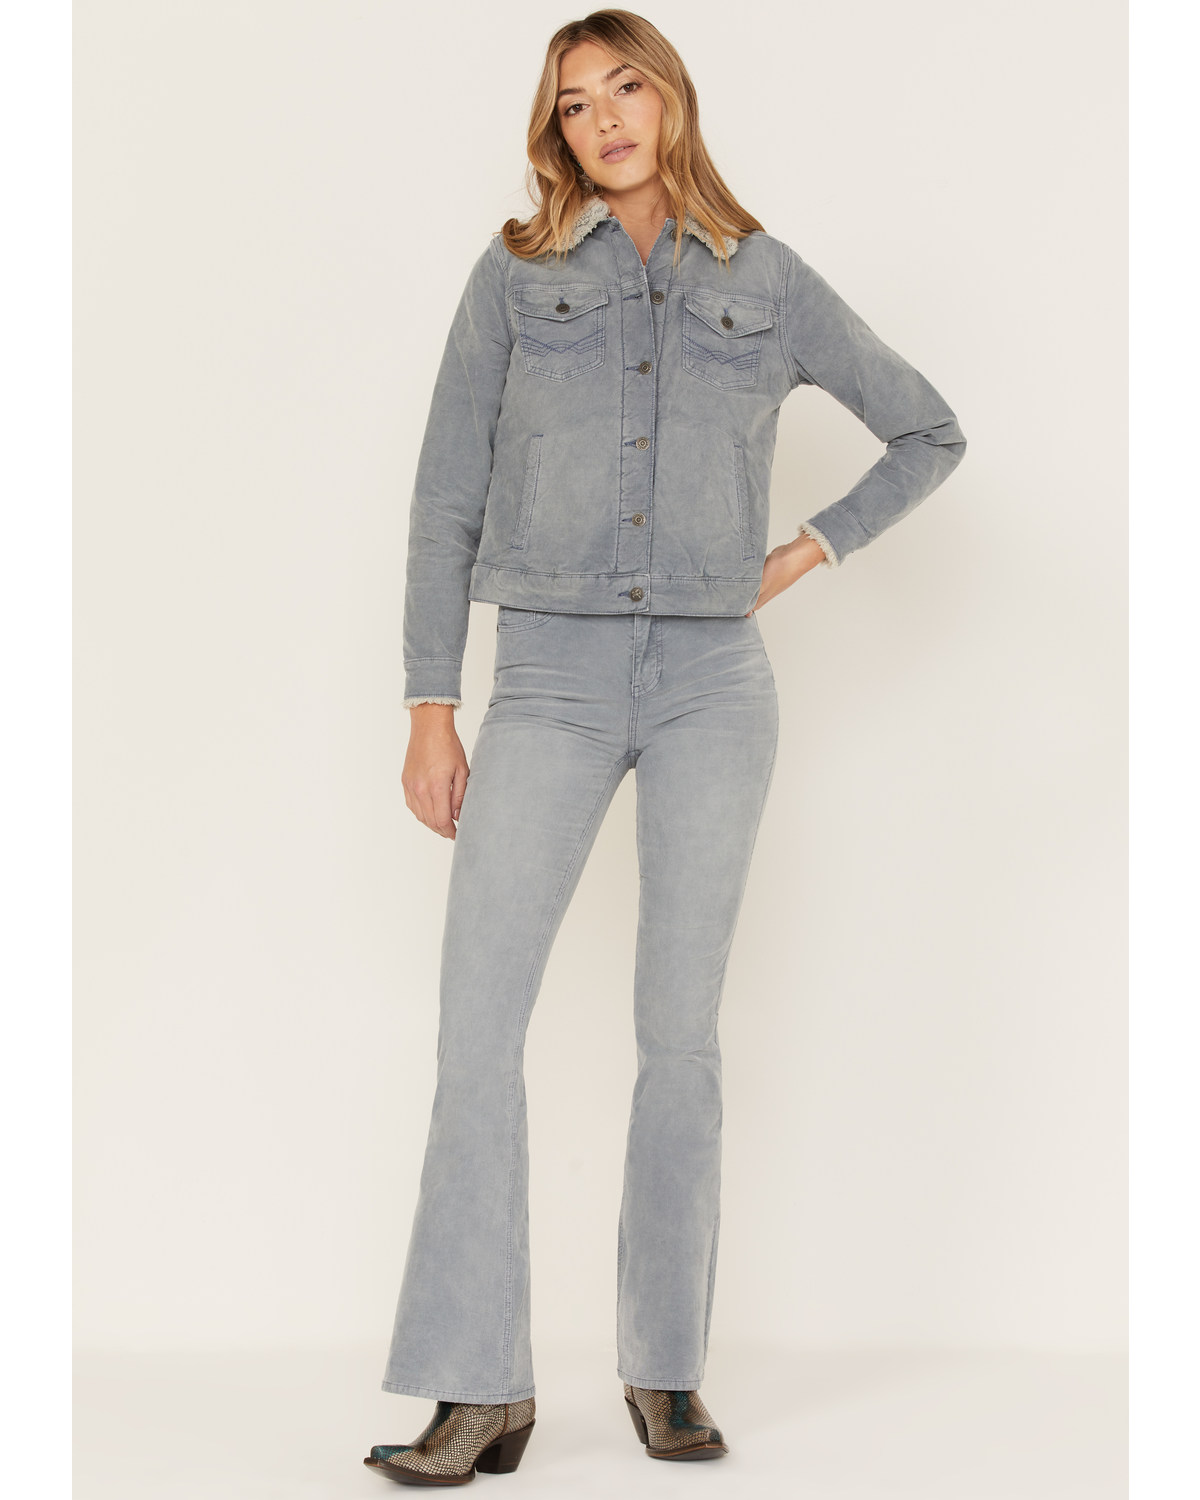 Idyllwind Women's High Risin' Corduroy Flare Jeans